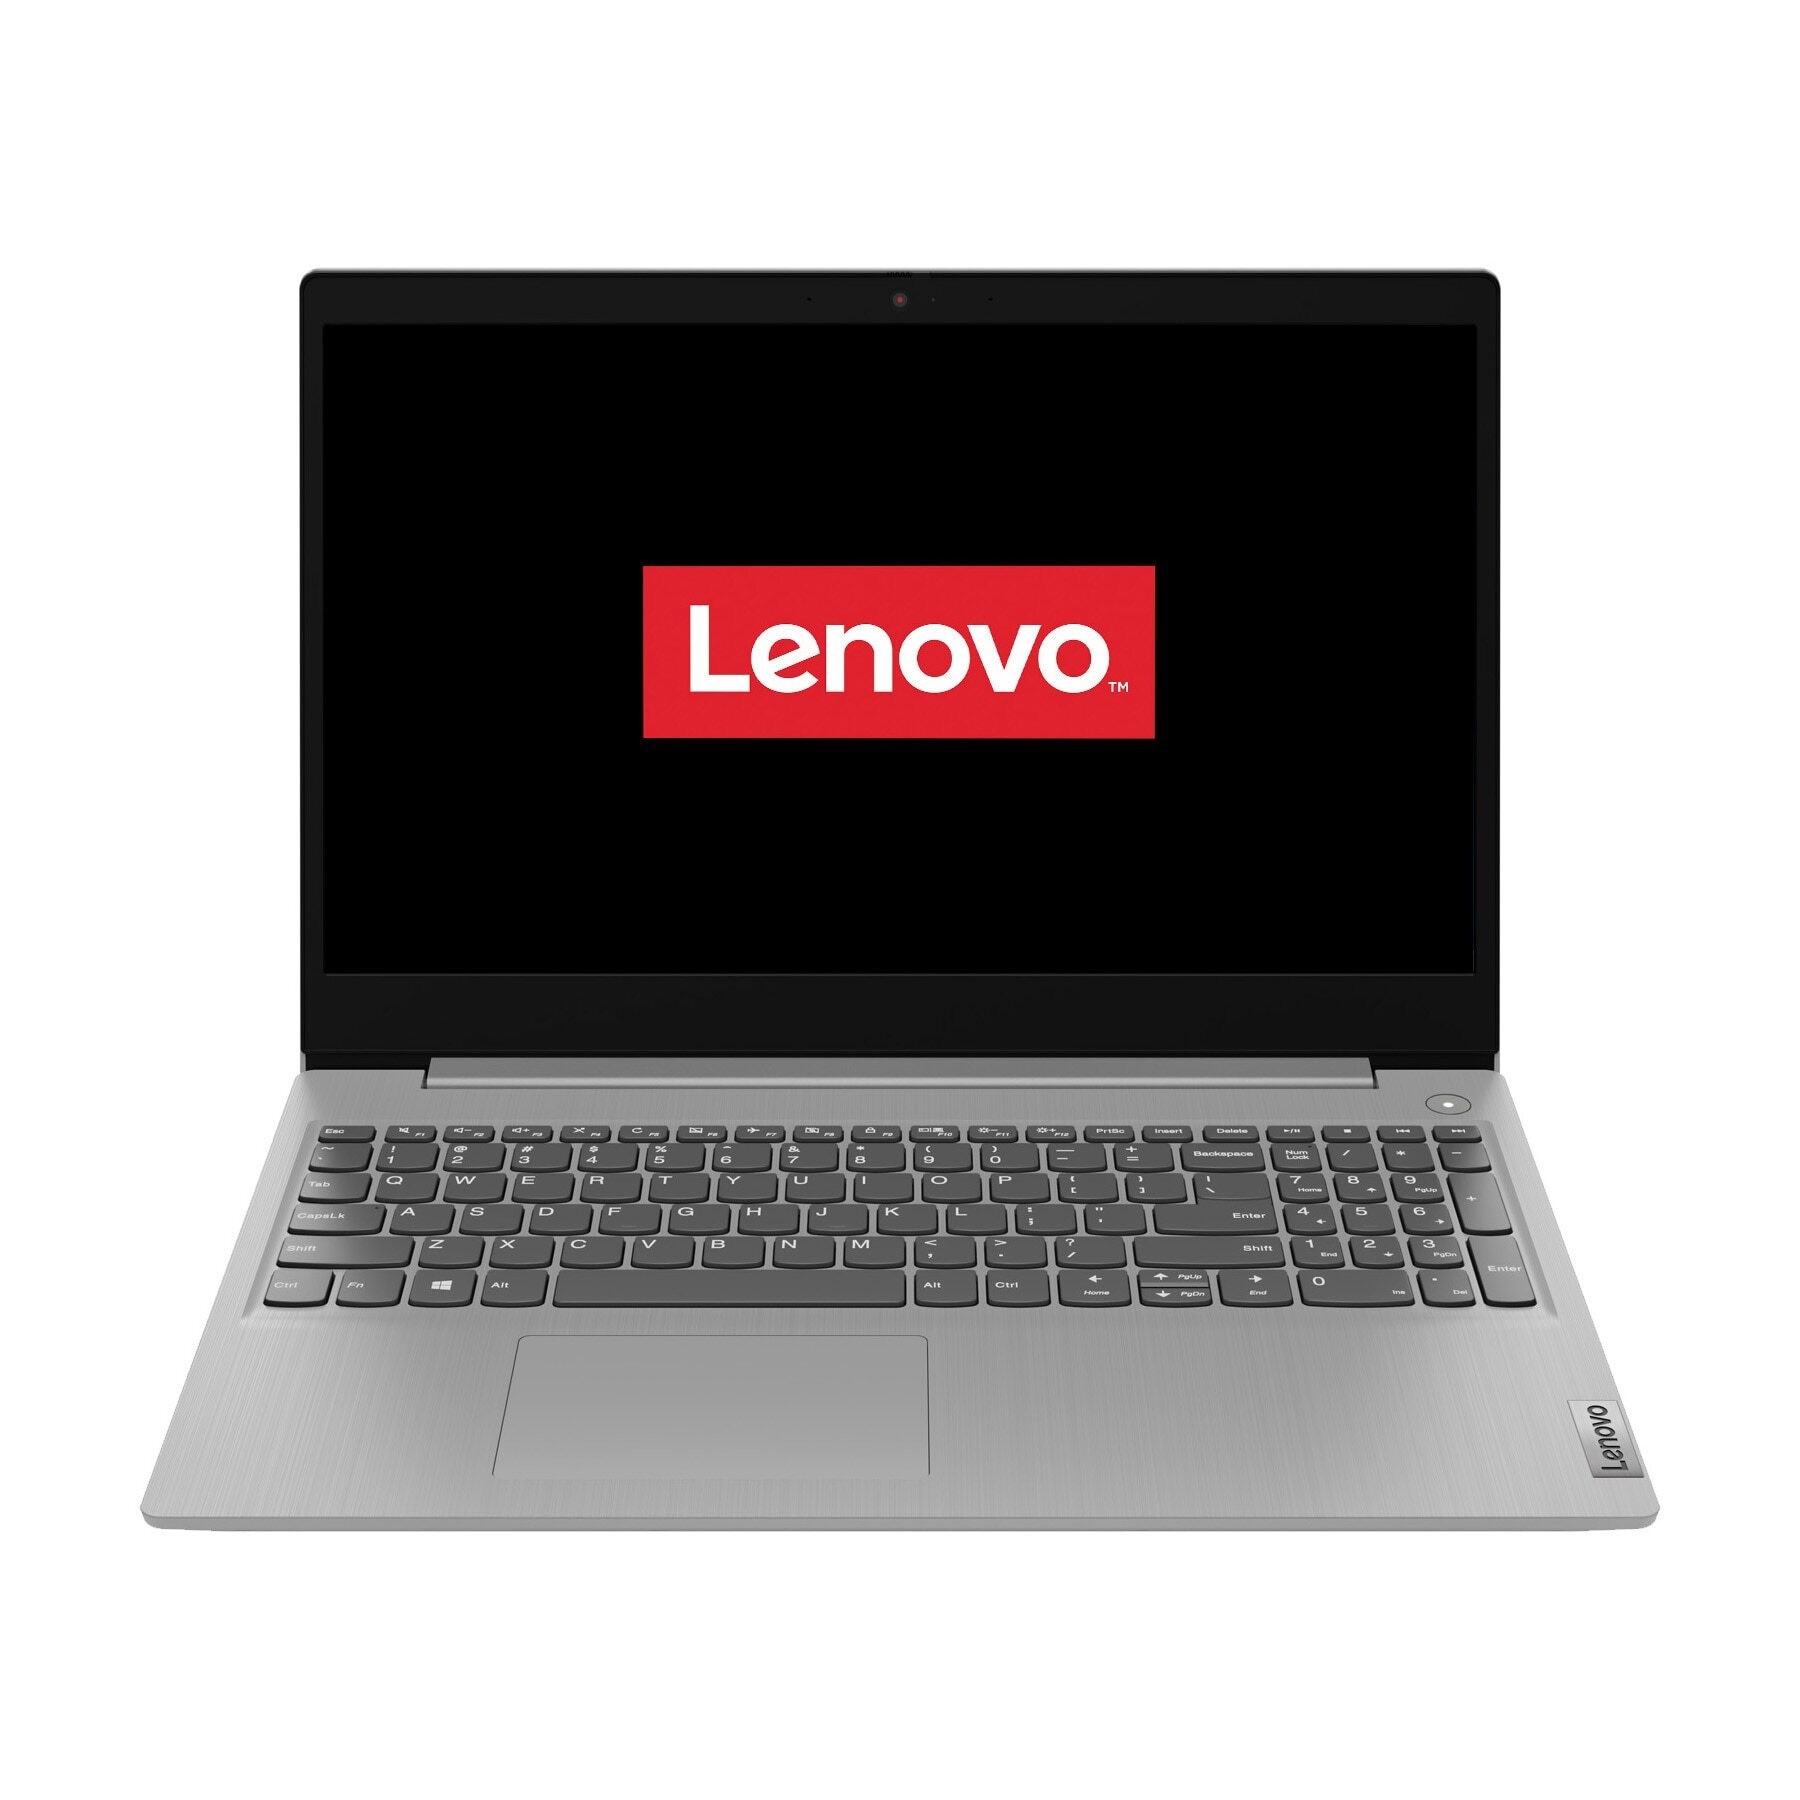 Notebook Lenovo IdeaPad 3 15IIL05 15.6 HD Touch Intel Core i5-1035G1 RAM 12GB SSD 256GB Windows 10 Home in S Mode Gri